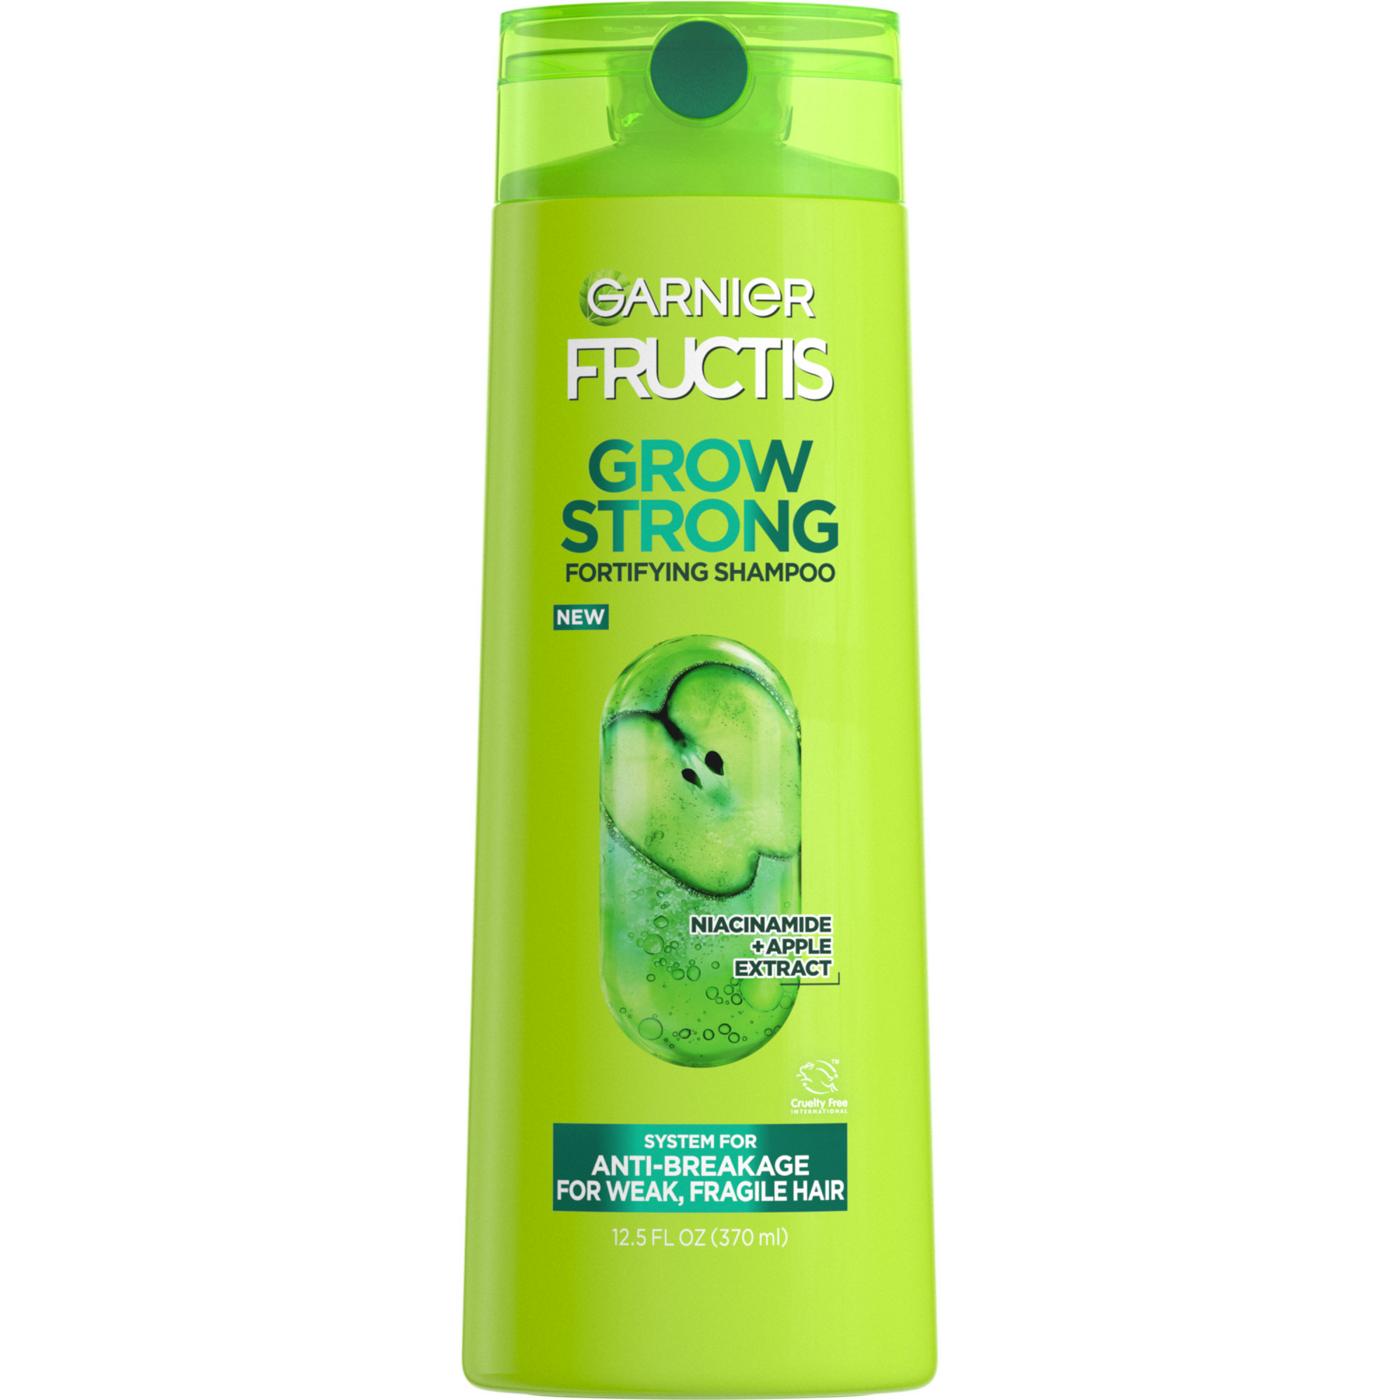 Garnier Fructis Grow Strong Fortifying Shampoo; image 1 of 8